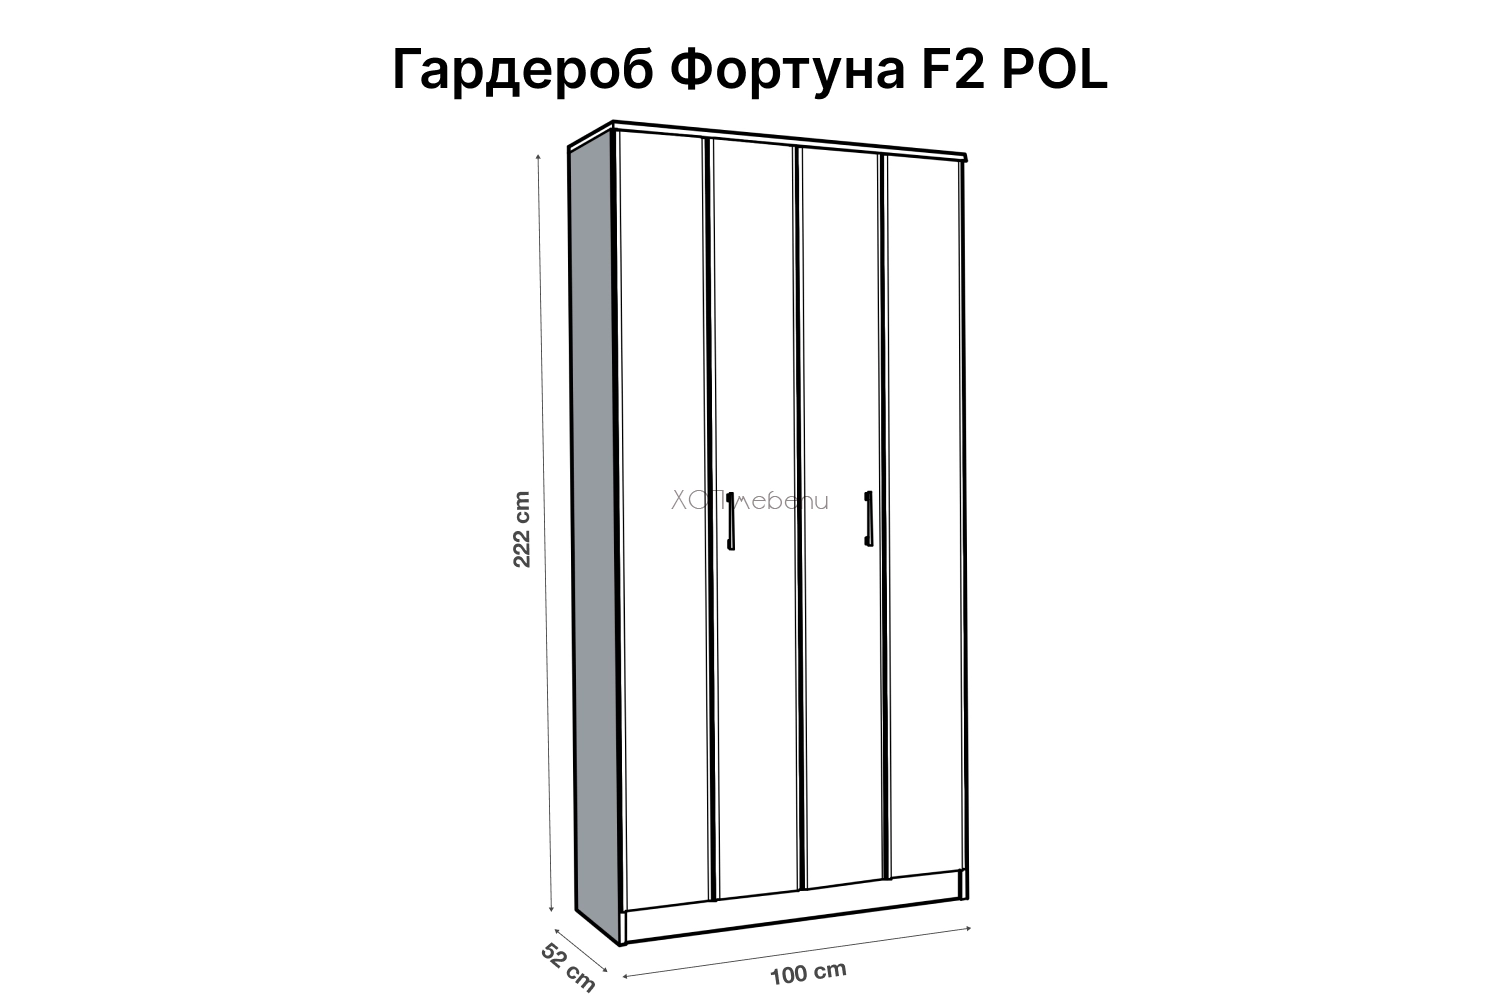 Размери на Гардероб Фортуна F2 POL - бял ID 6883